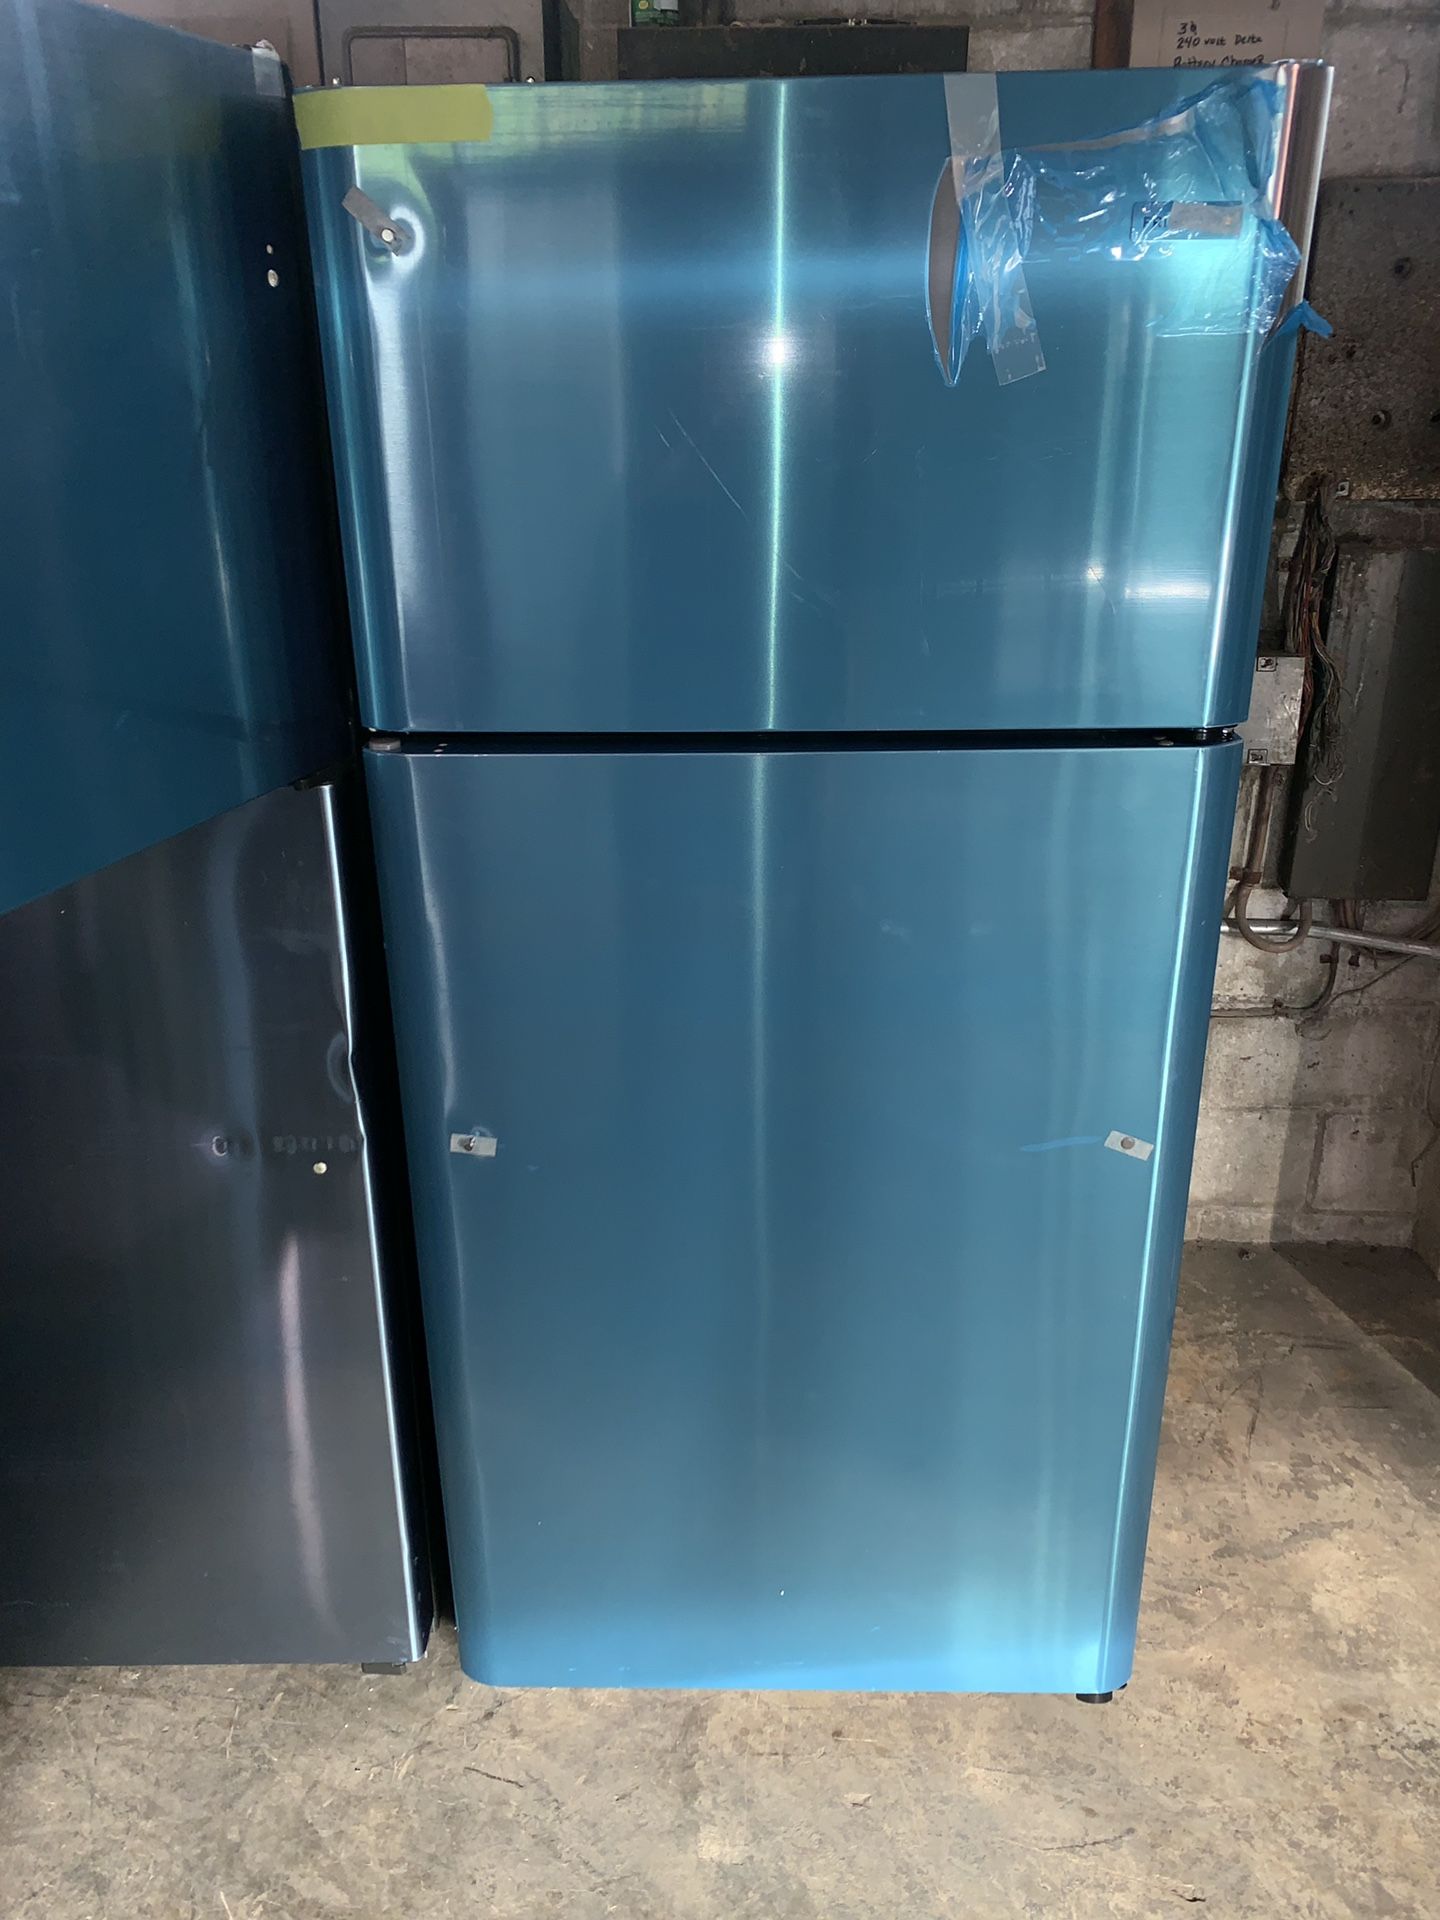 New scratch & dent FRIGIDAIRE top freezer refrigerator in excellent conditions